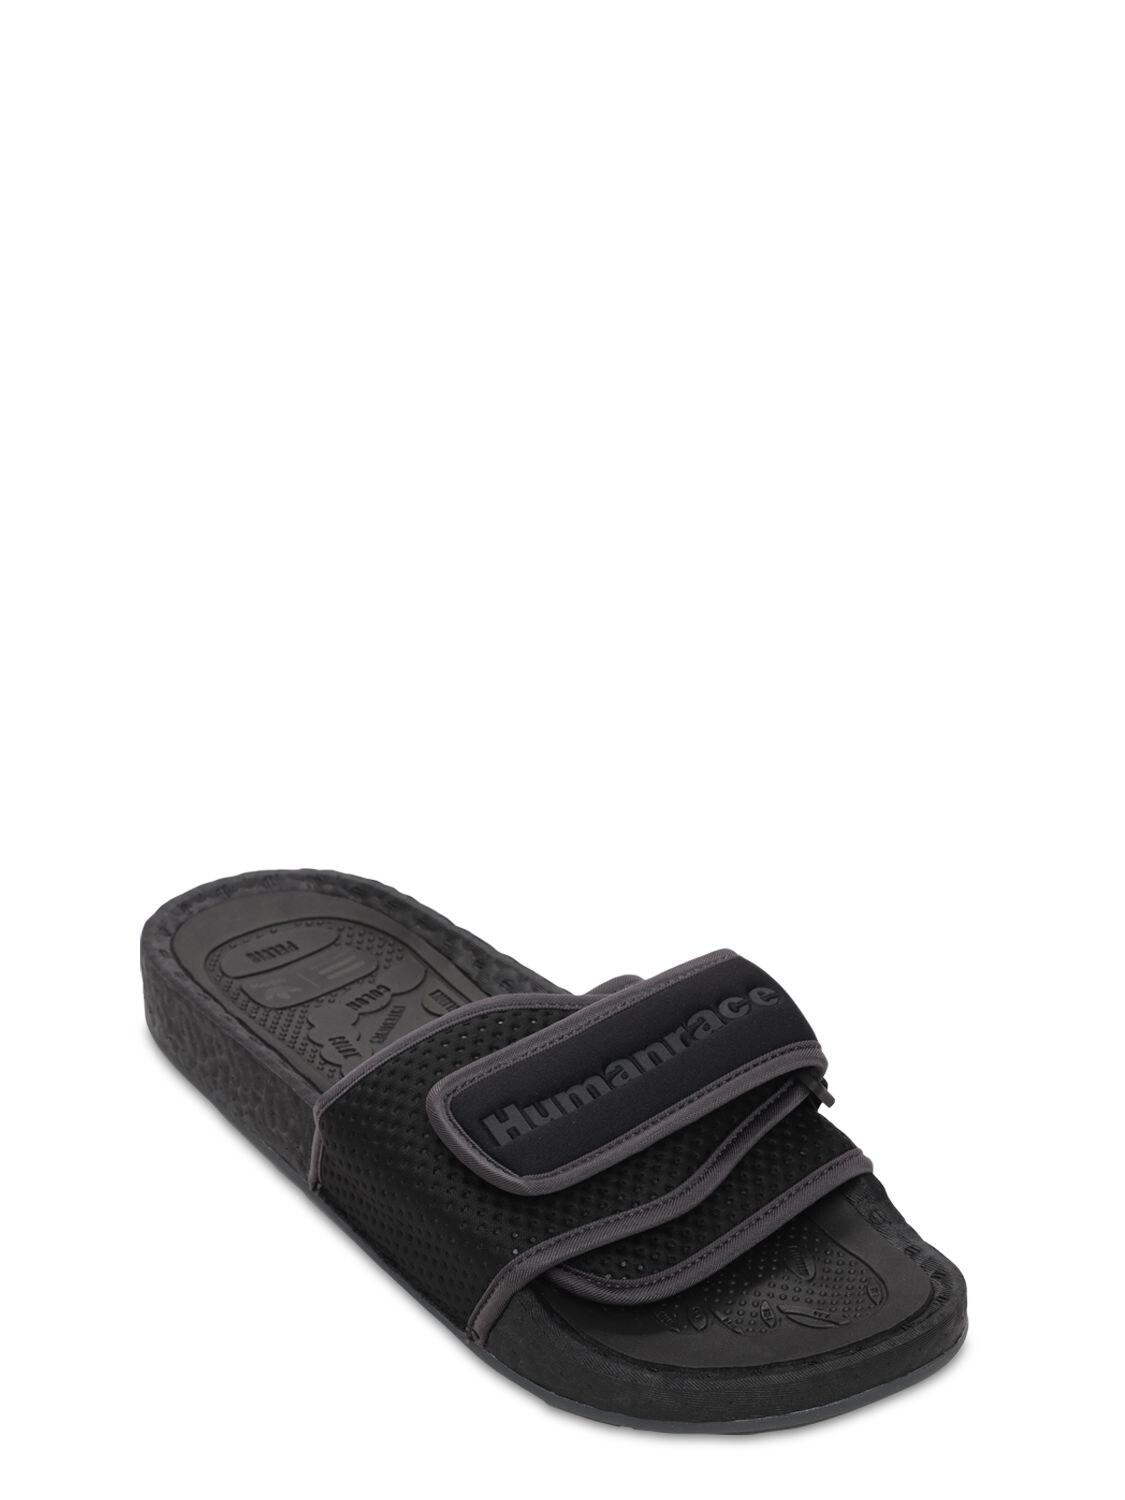 adidas Originals Synthetic Pharrell Williams Chancletas Hu Sandals in Black  | Lyst